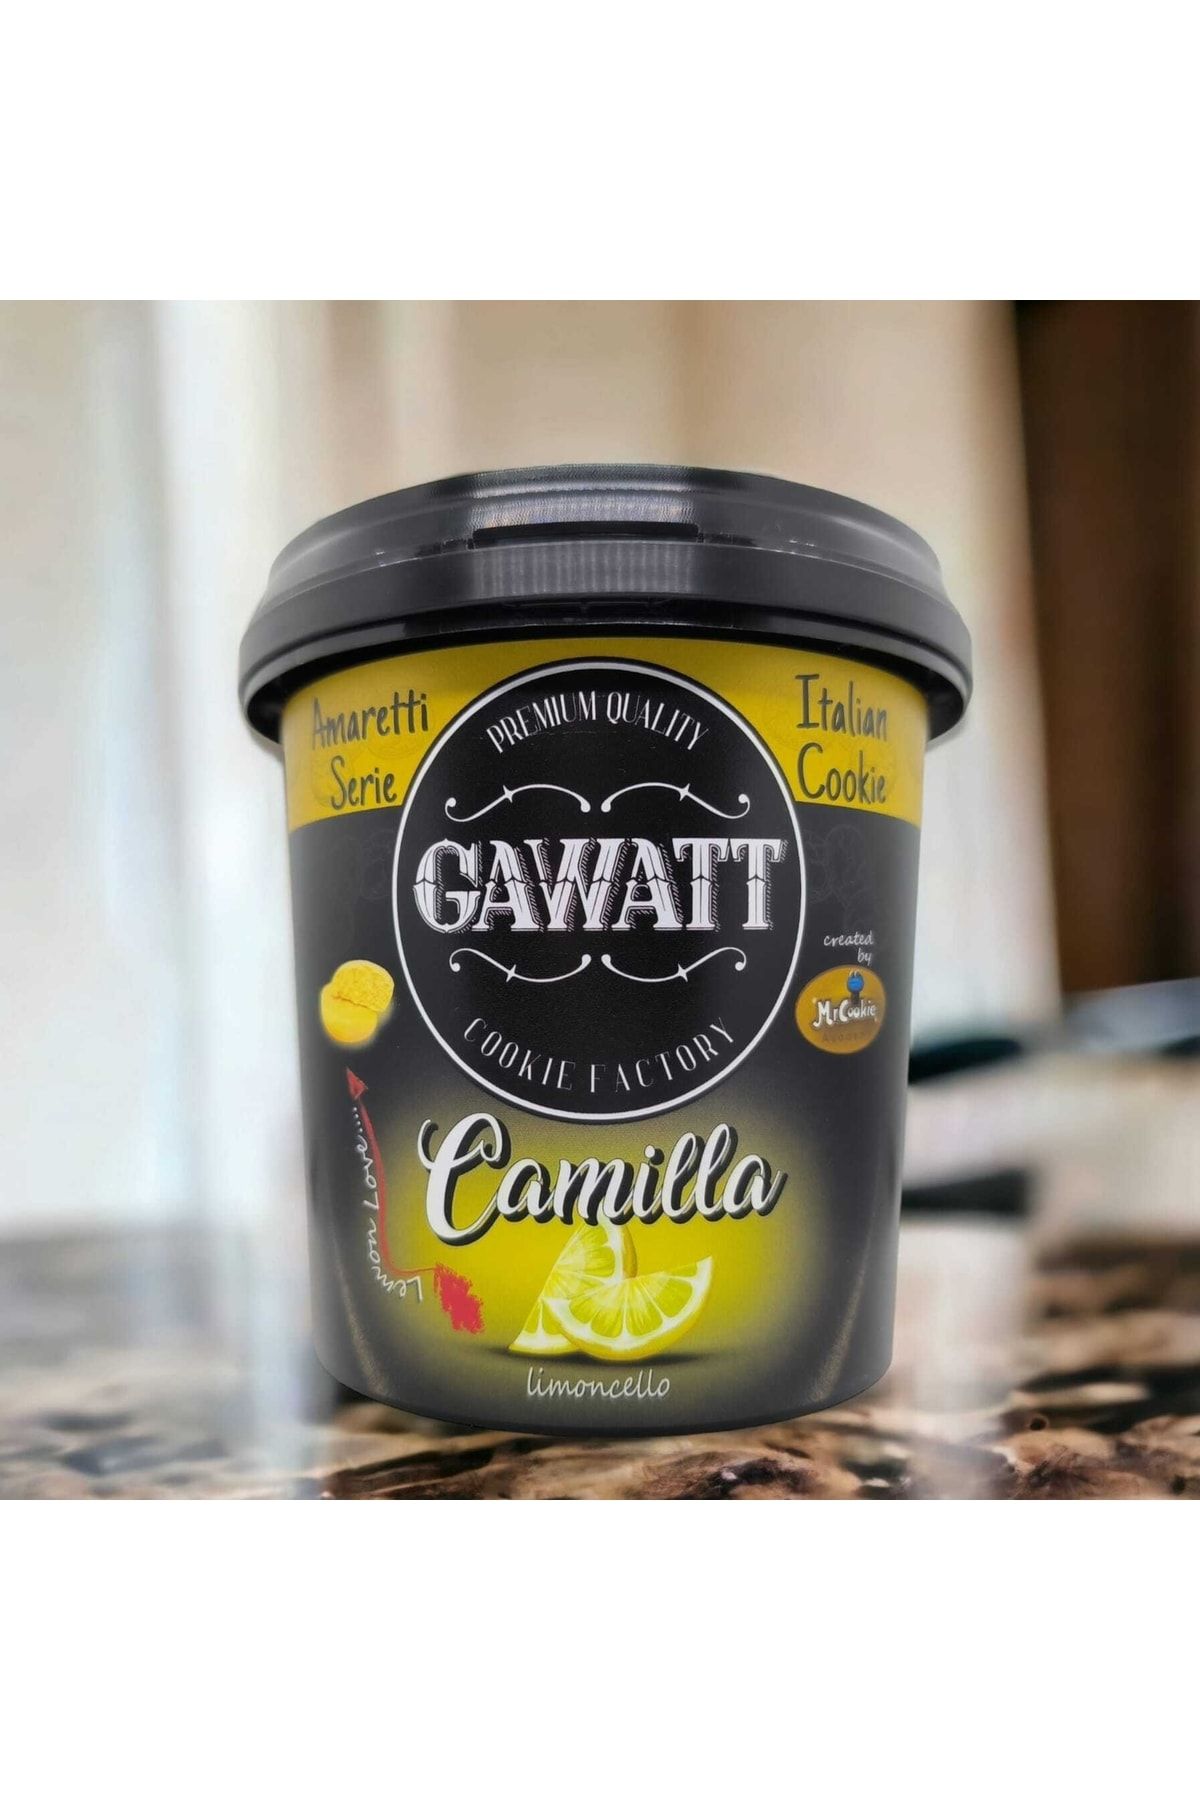 Gawatt Camilla: %16 Limonlu Kurabiye 250gr. (AMARETTİ COOKİE SERİE)